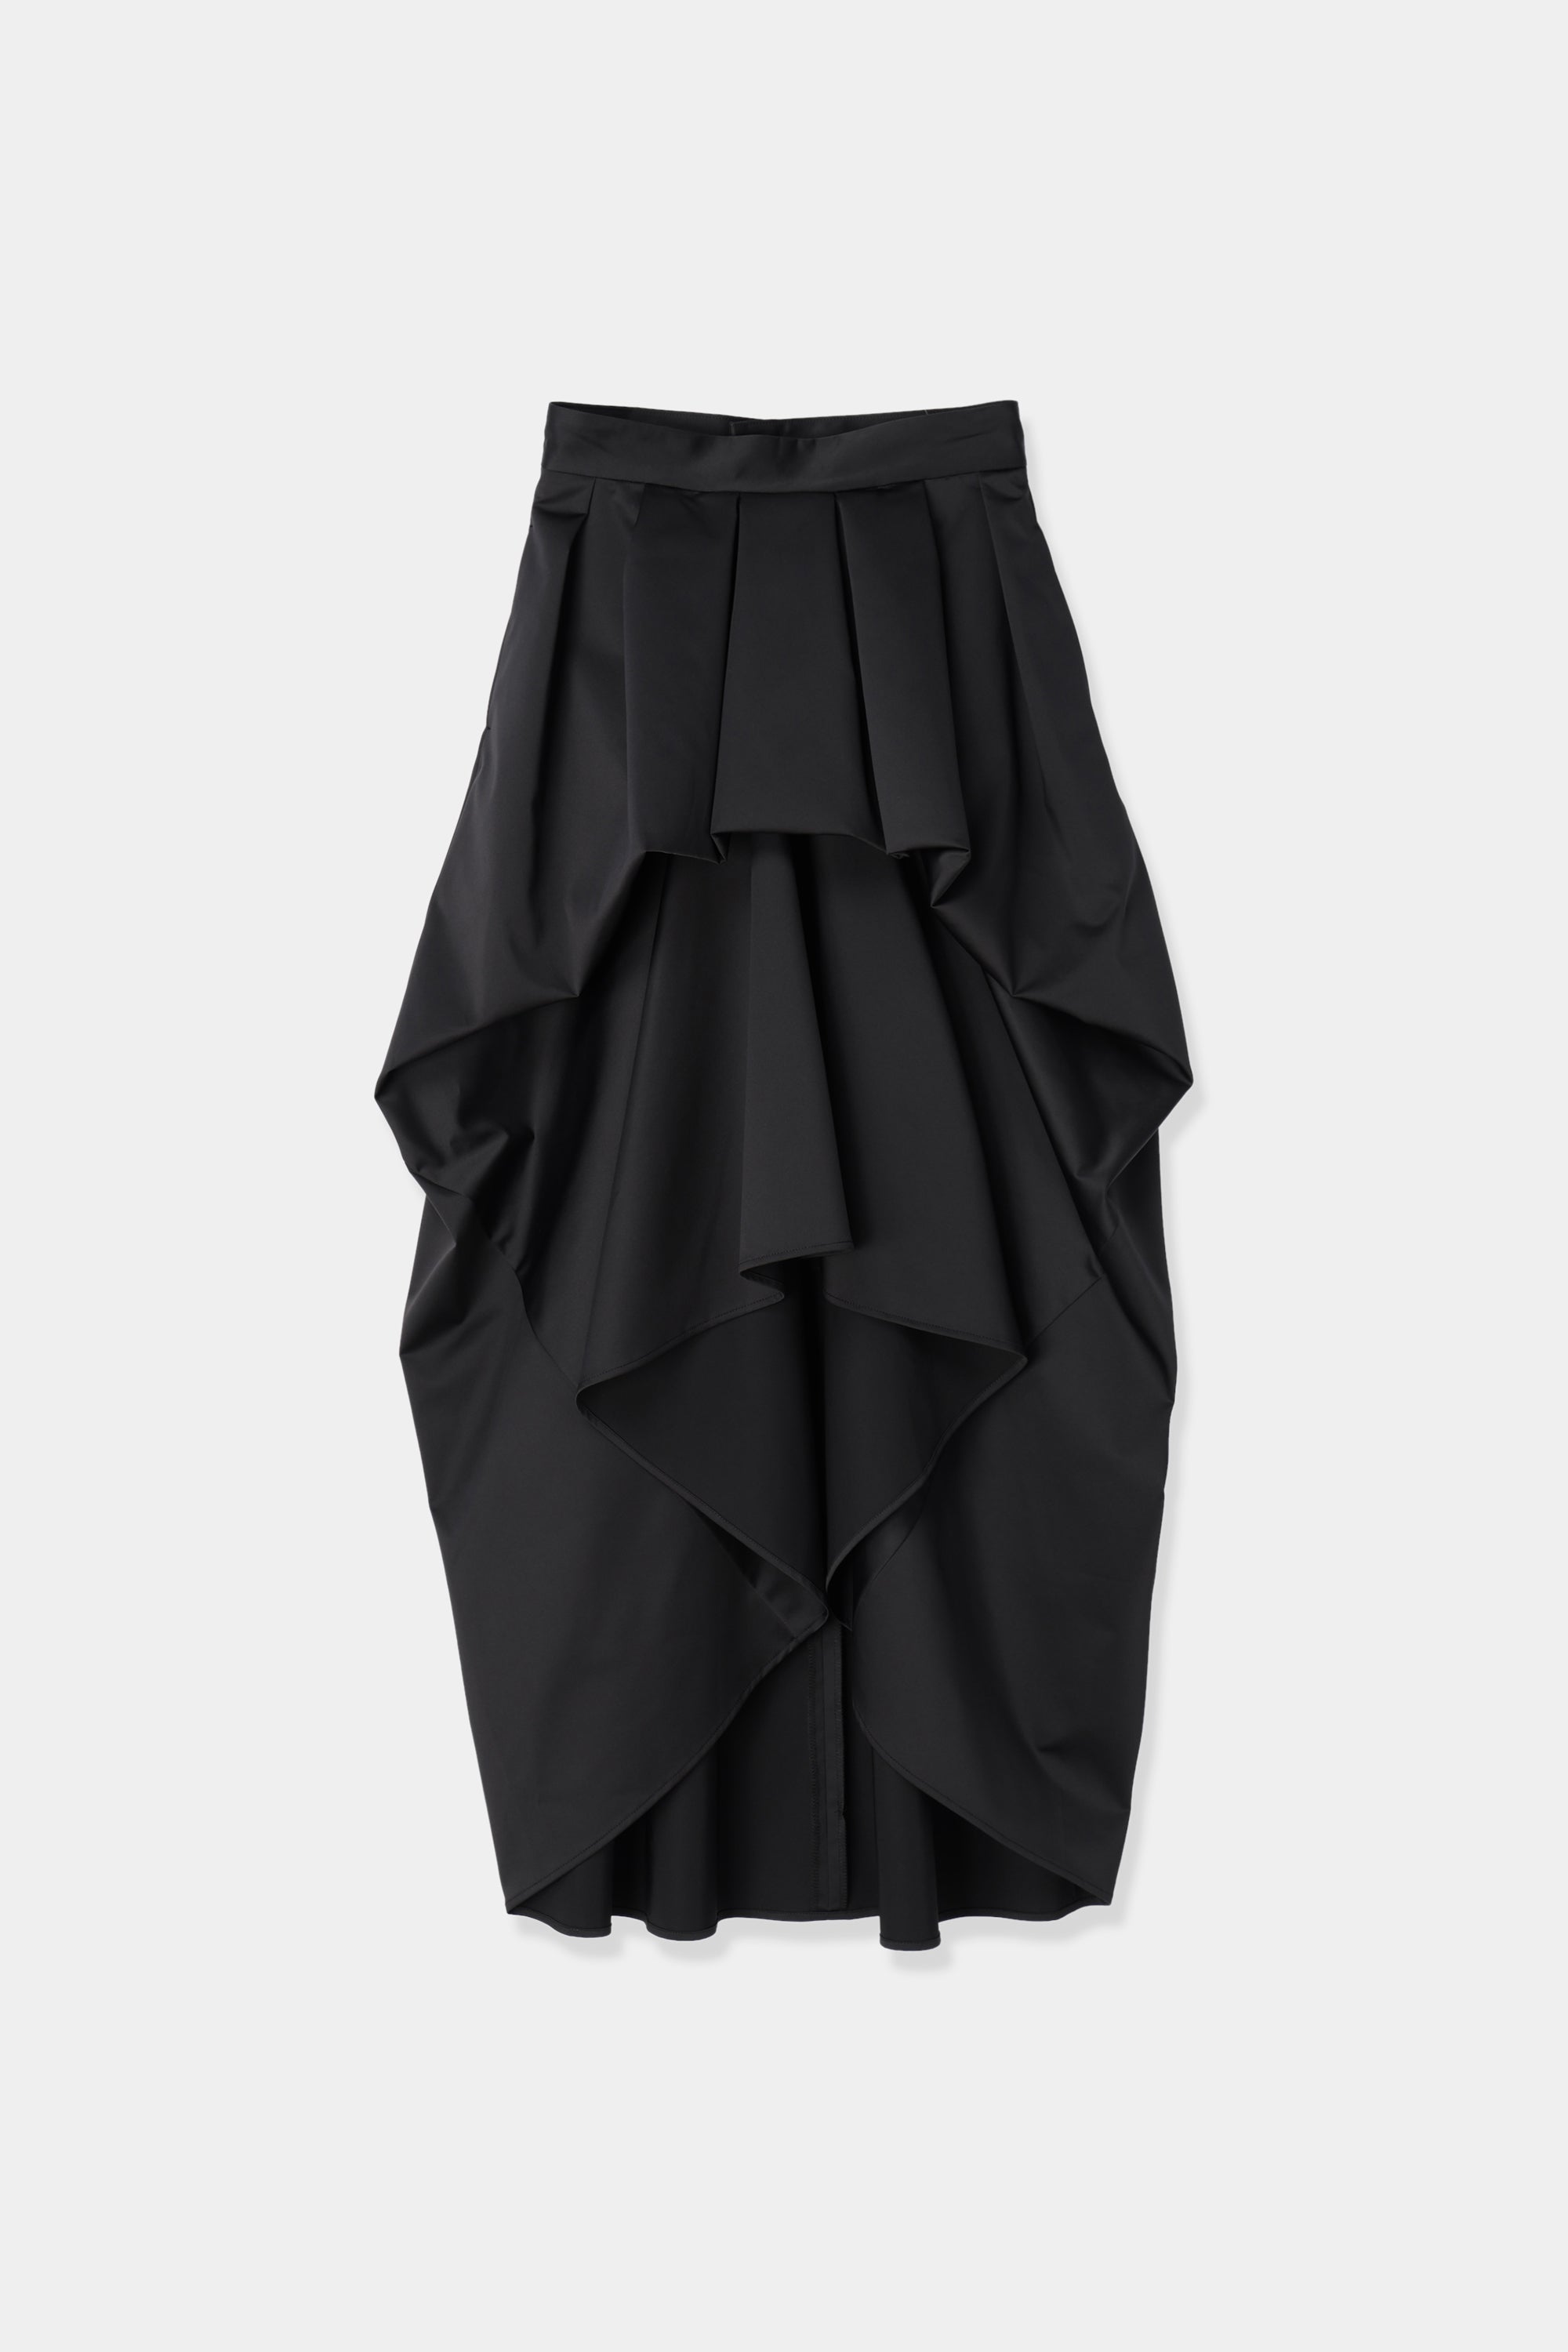 design taffeta skirt